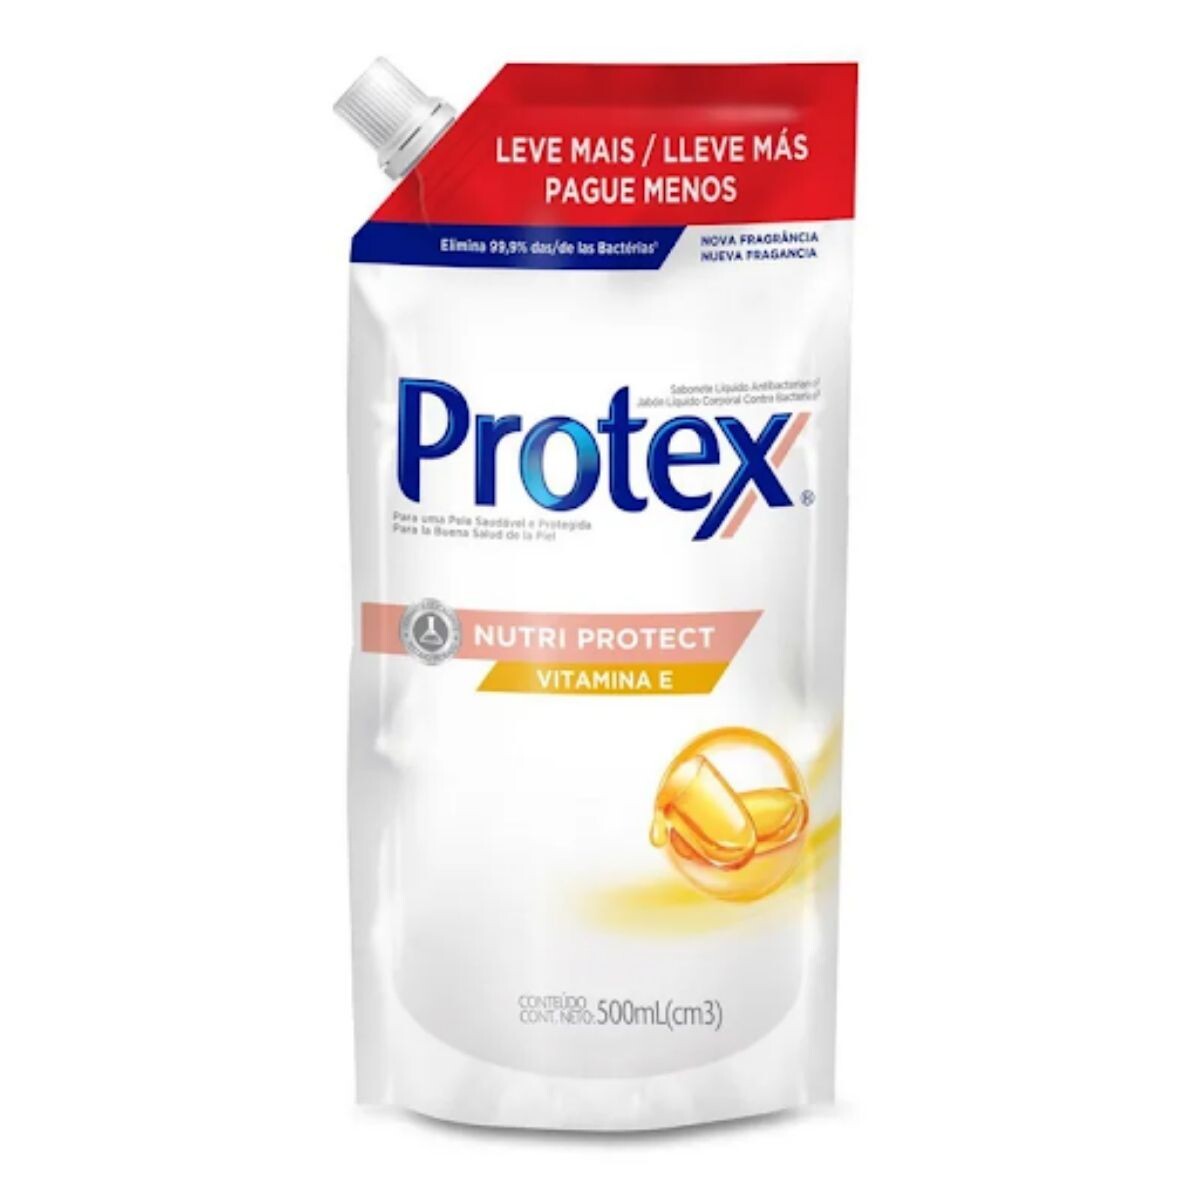 Jabón Liquido Astral Protex Nutri Protect Vitamina E Doypack 500 ML 